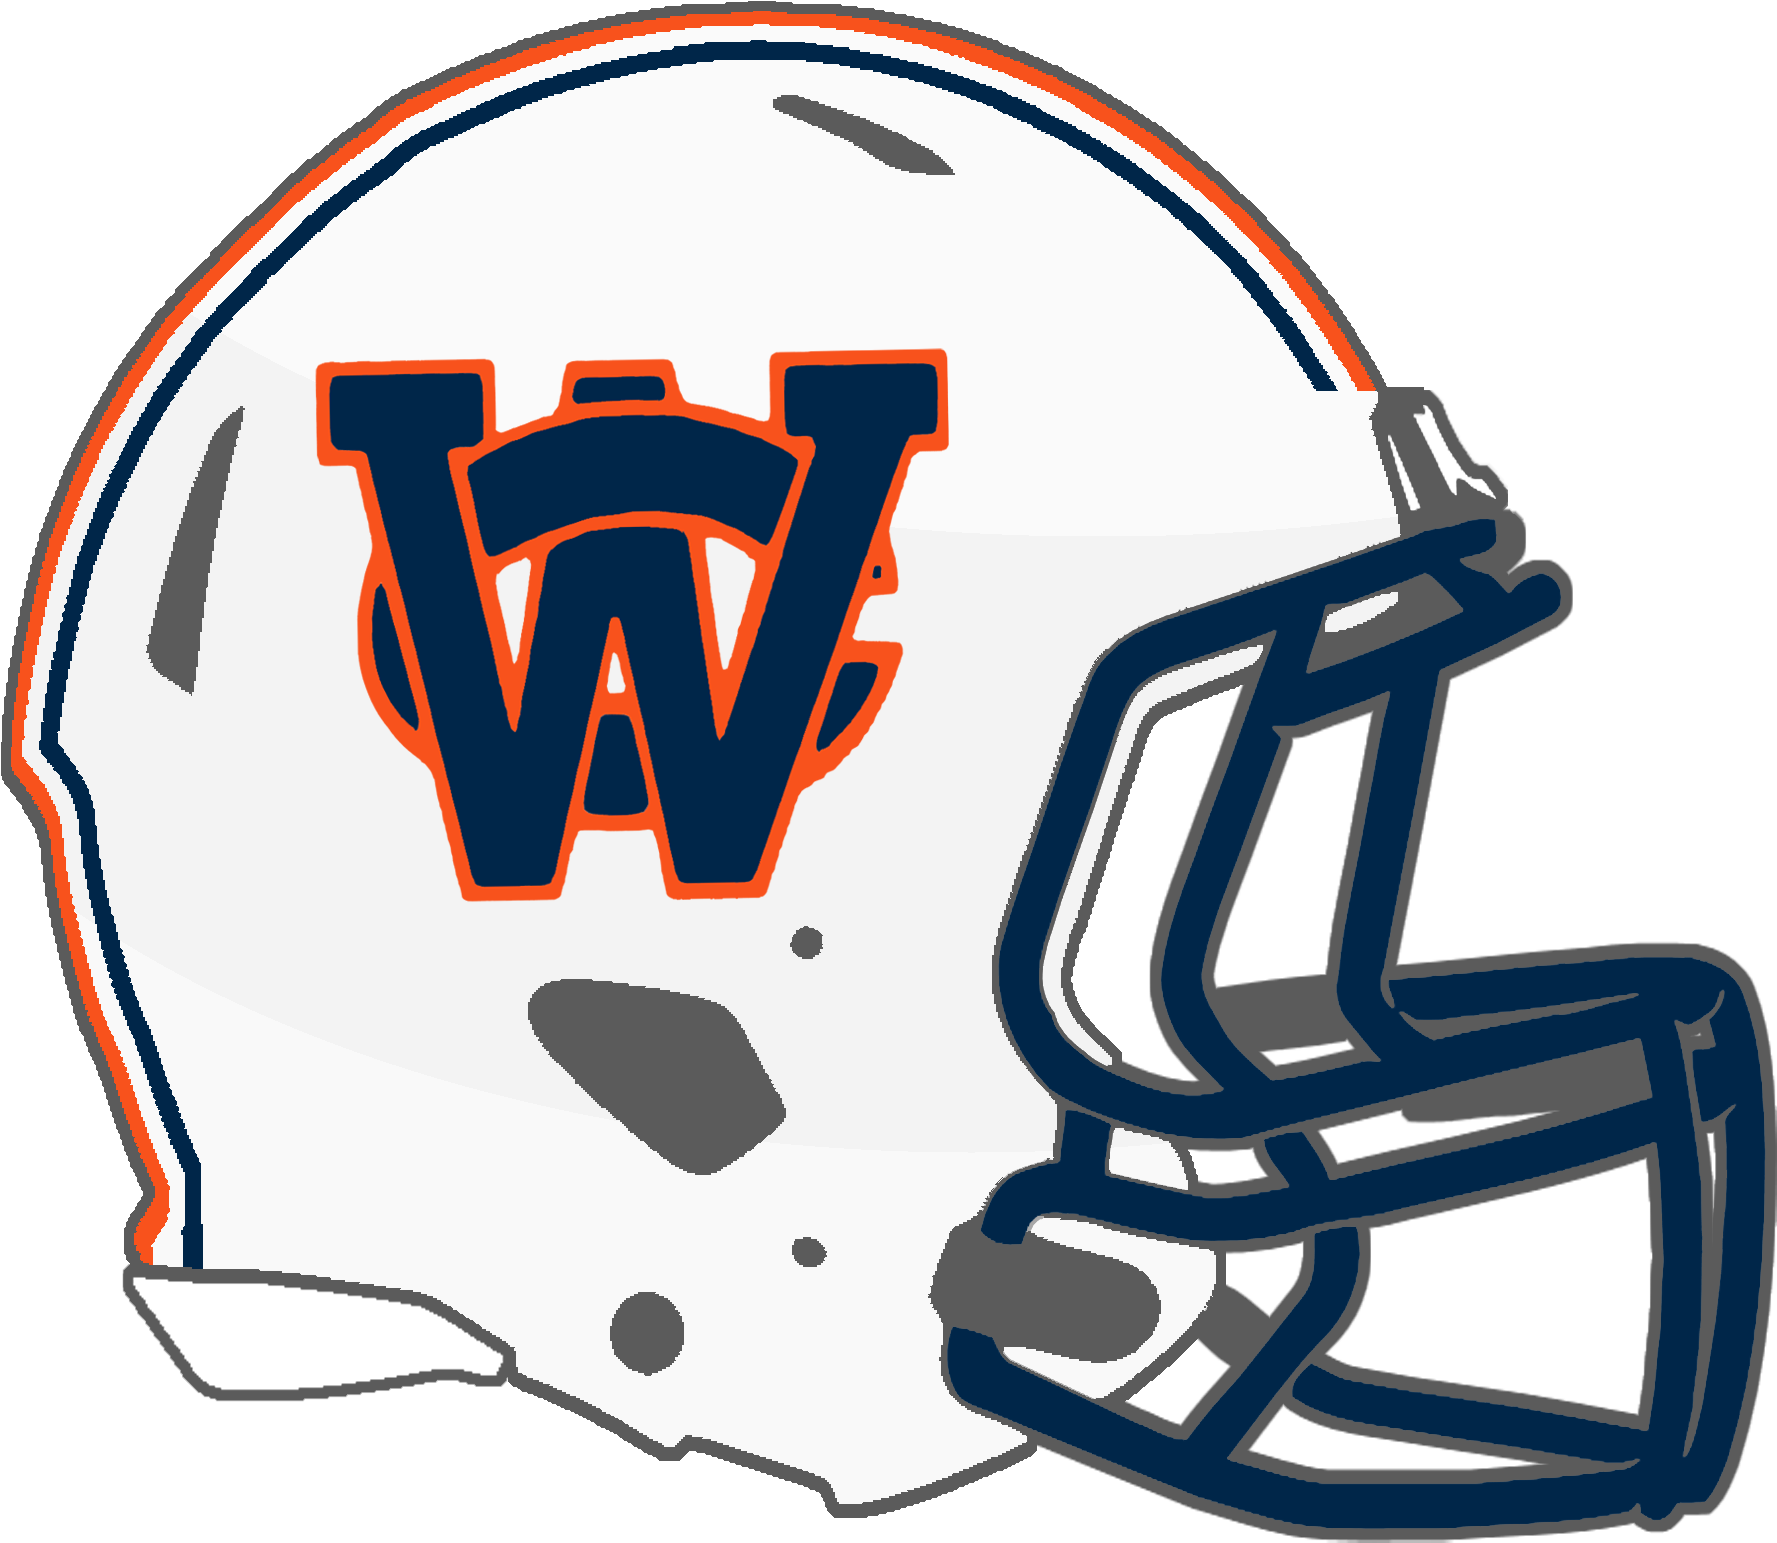 Wayne County War Eagles - Miss State Football Helmet (1800x1565)